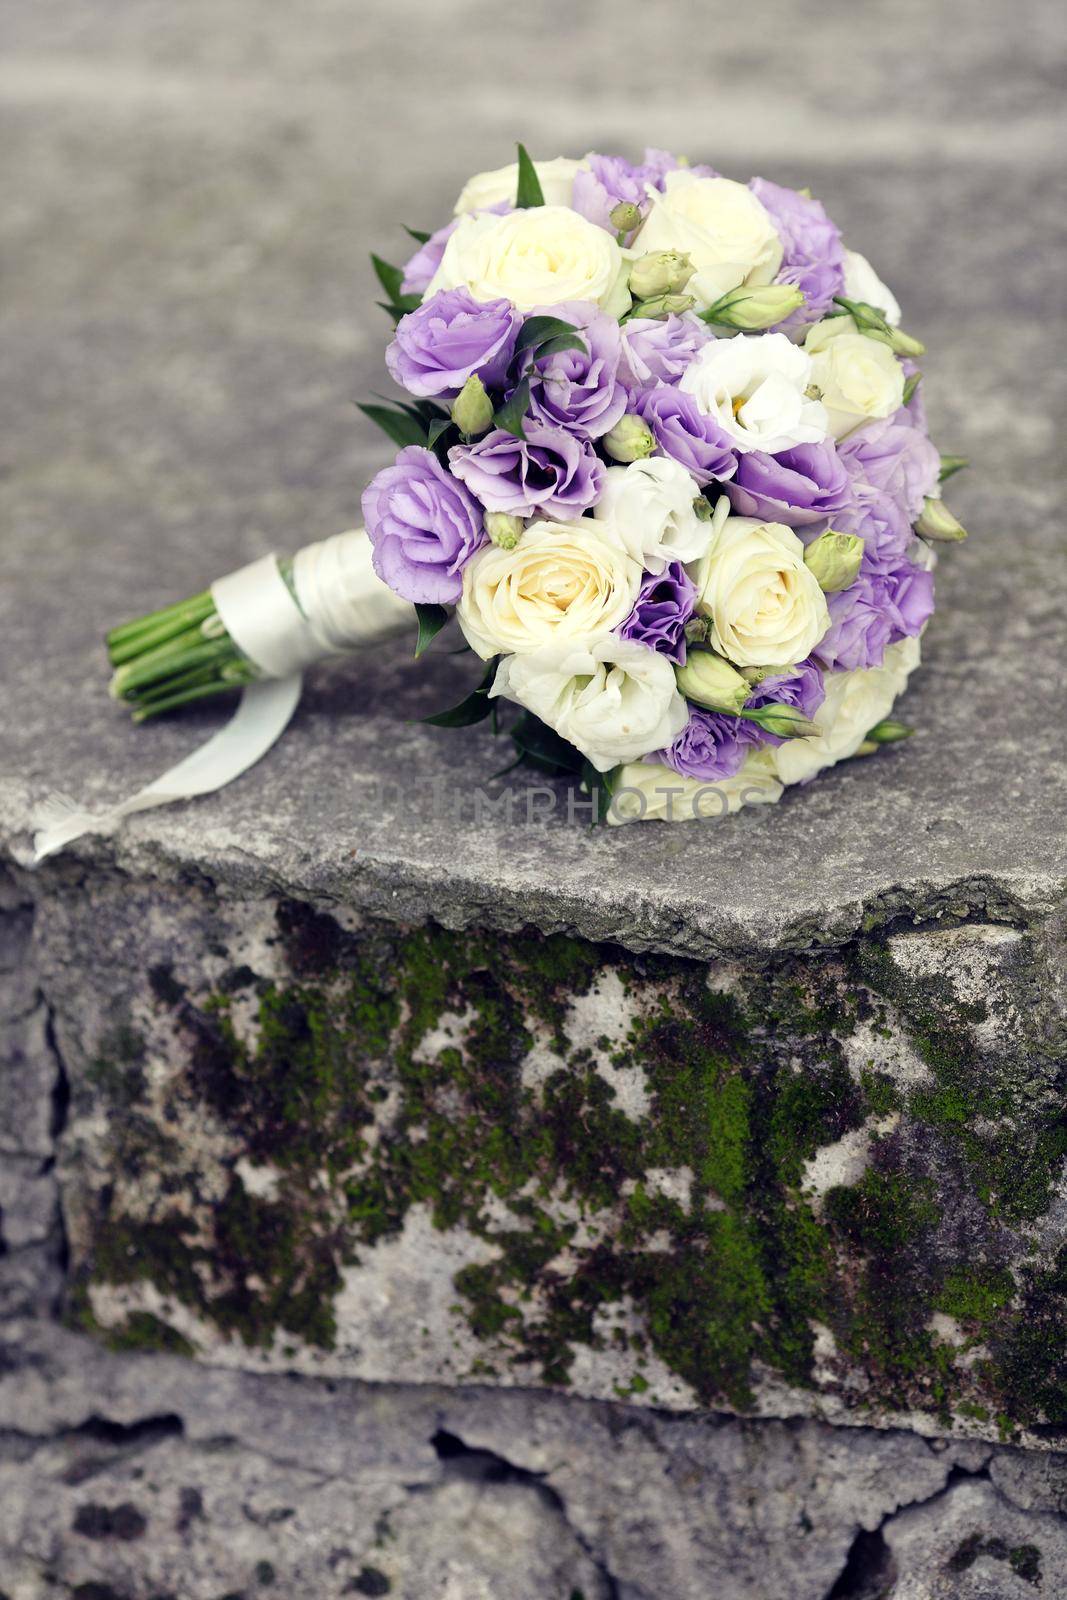 Wedding bouquet. Bride's flowers